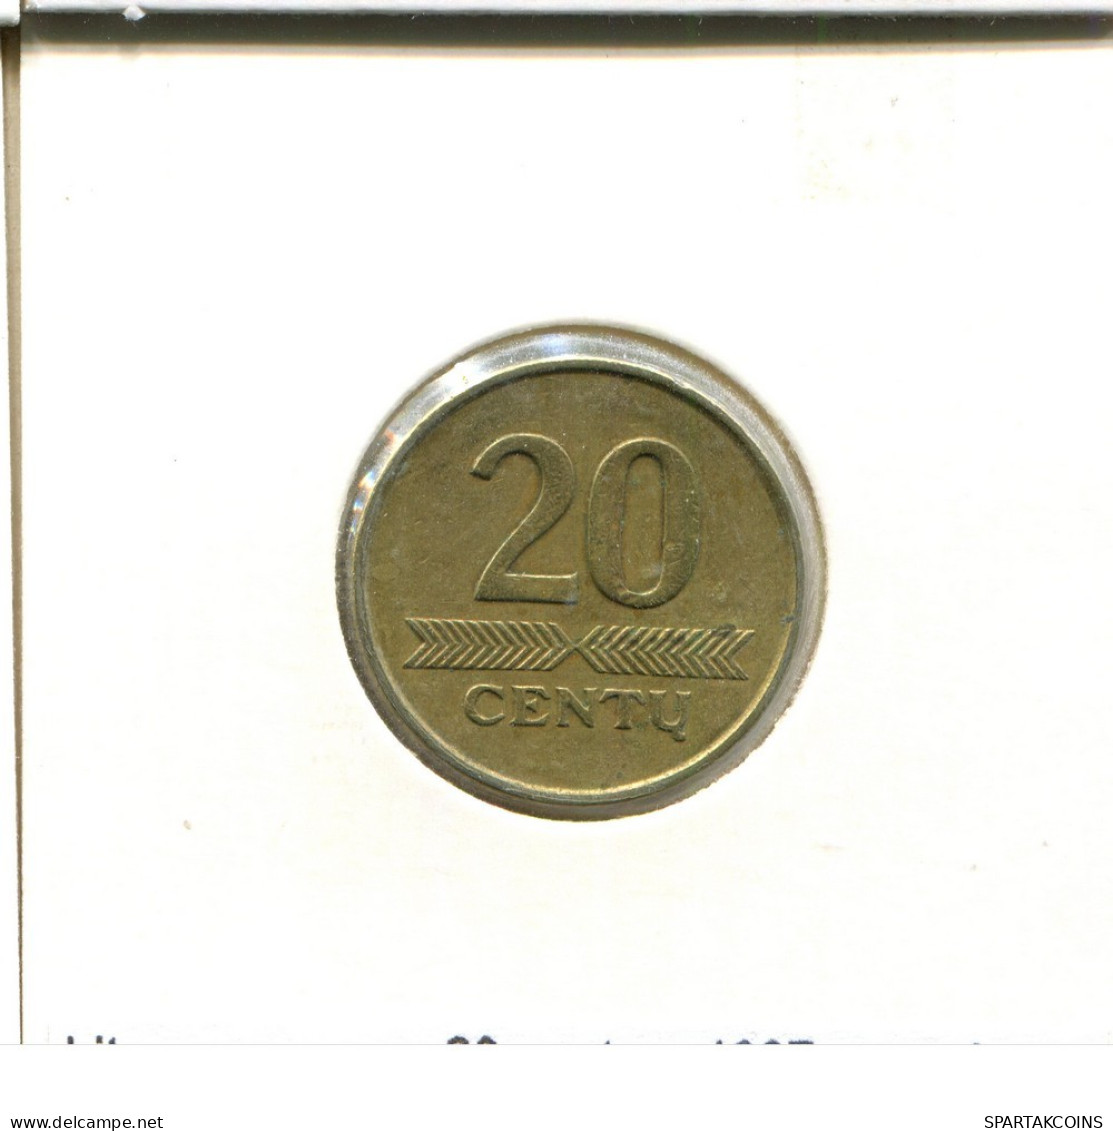 20 CENTU 1997 LITUANIA LITHUANIA Moneda #AS701.E.A - Lithuania